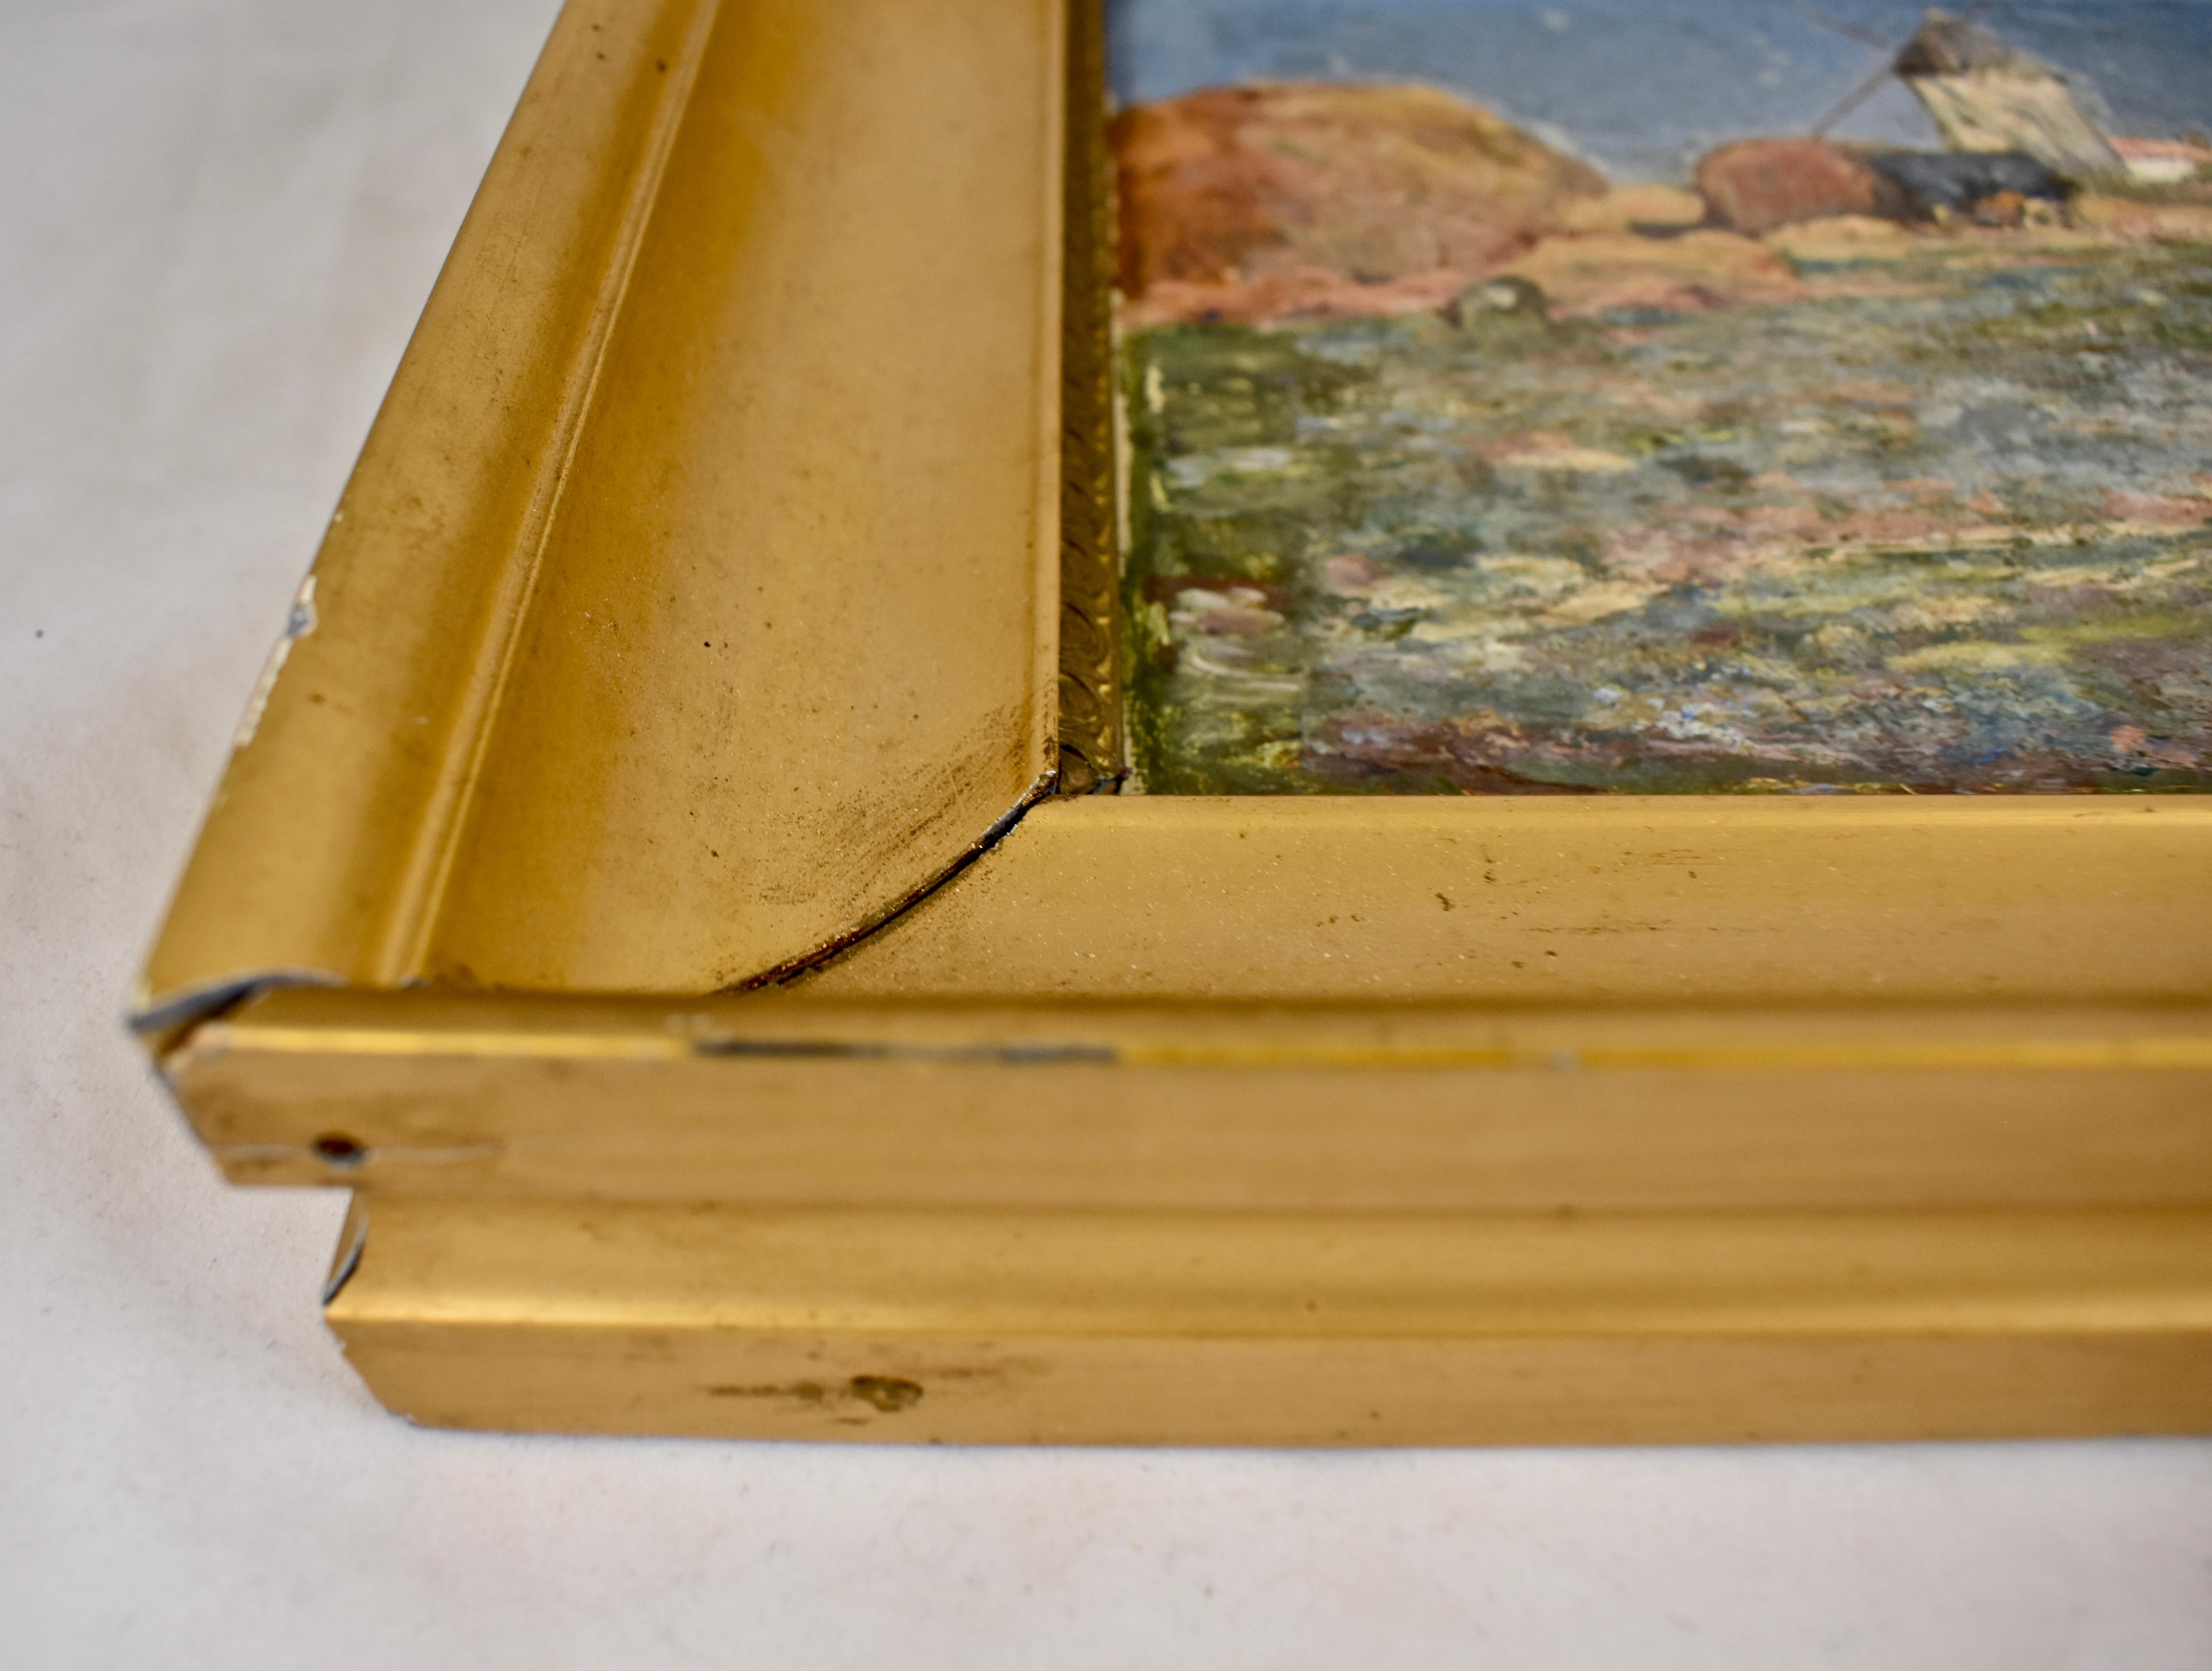 Marc Mongin Gold Leaf Framed Oil on Linen French Landscape Painting, Dated 1919 For Sale 5